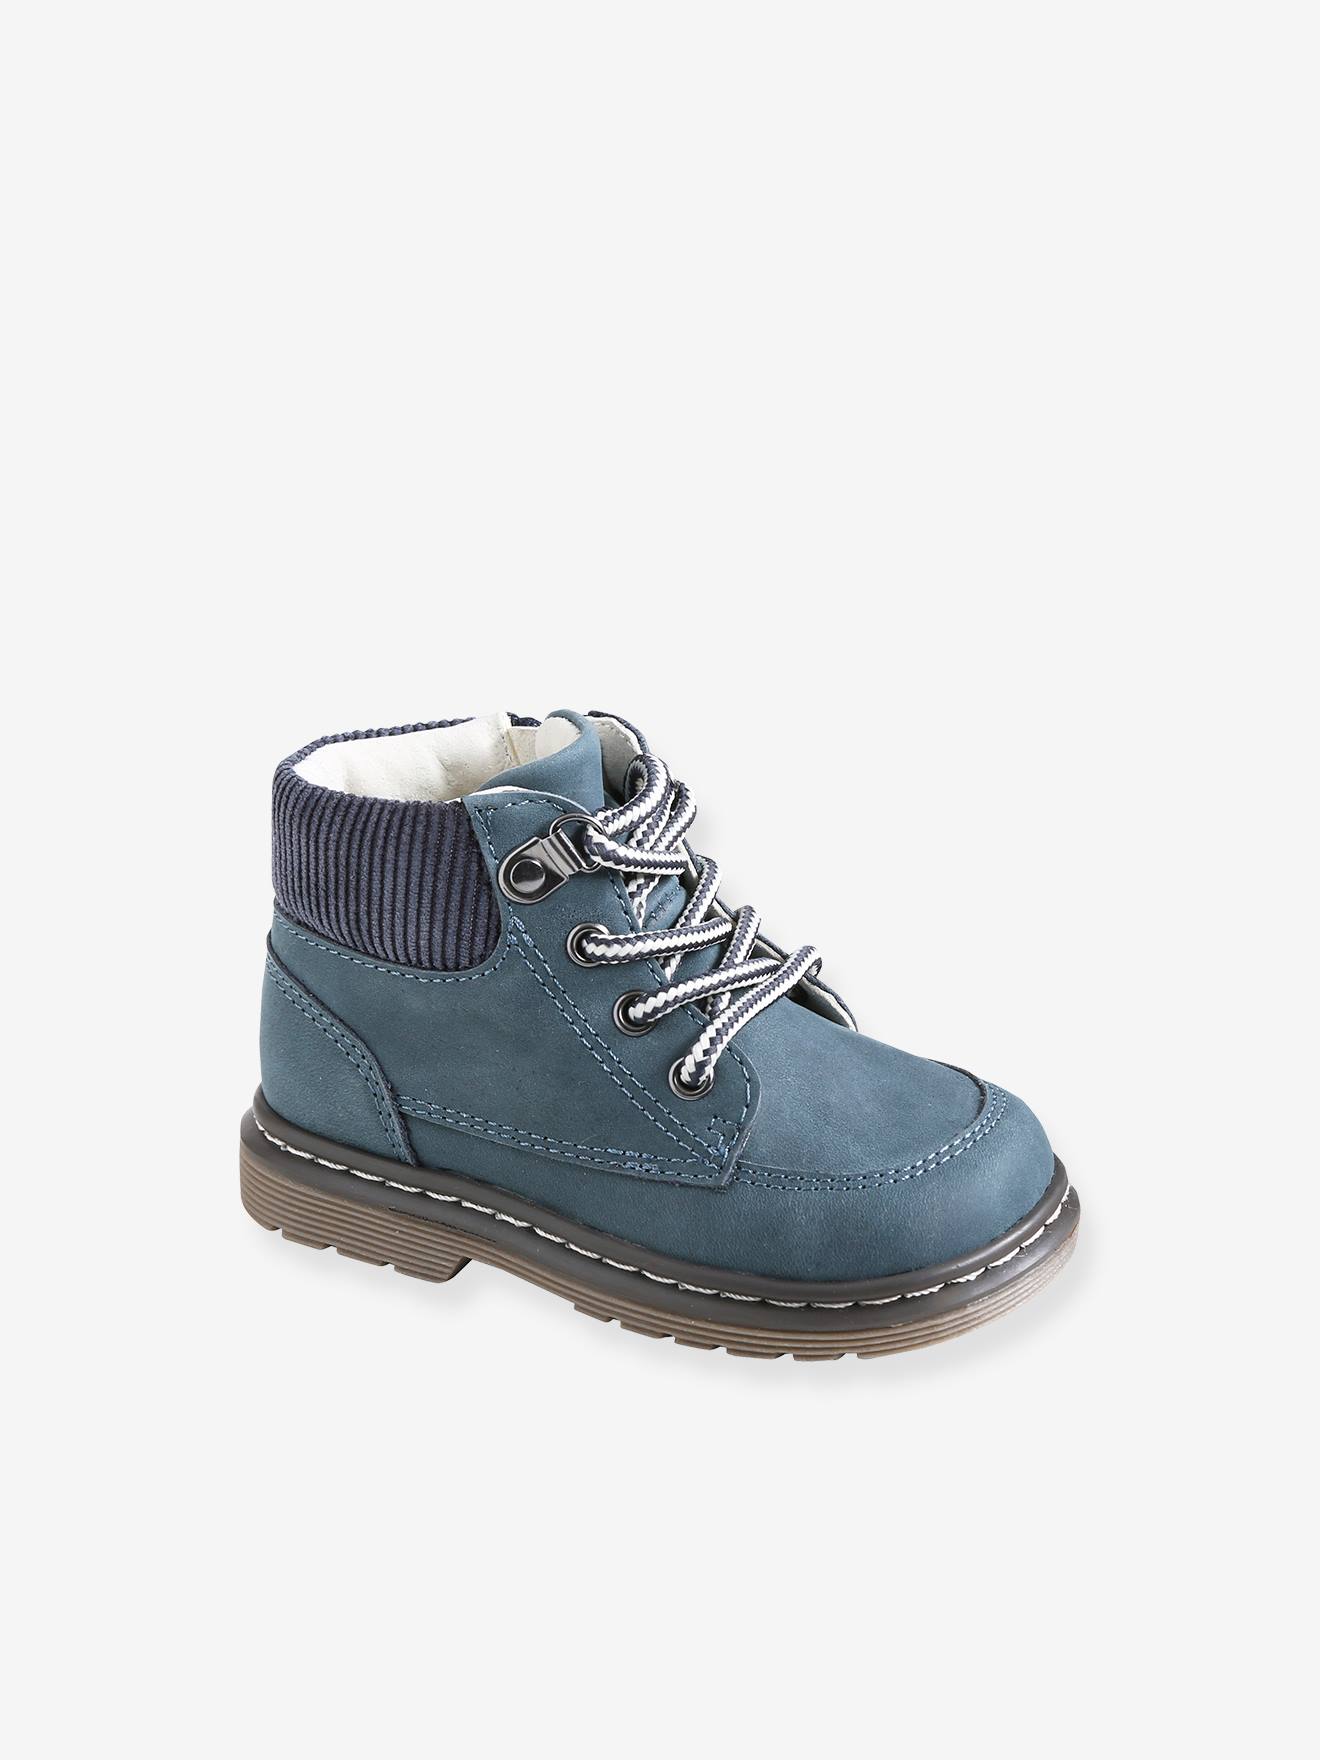 boys blue boots